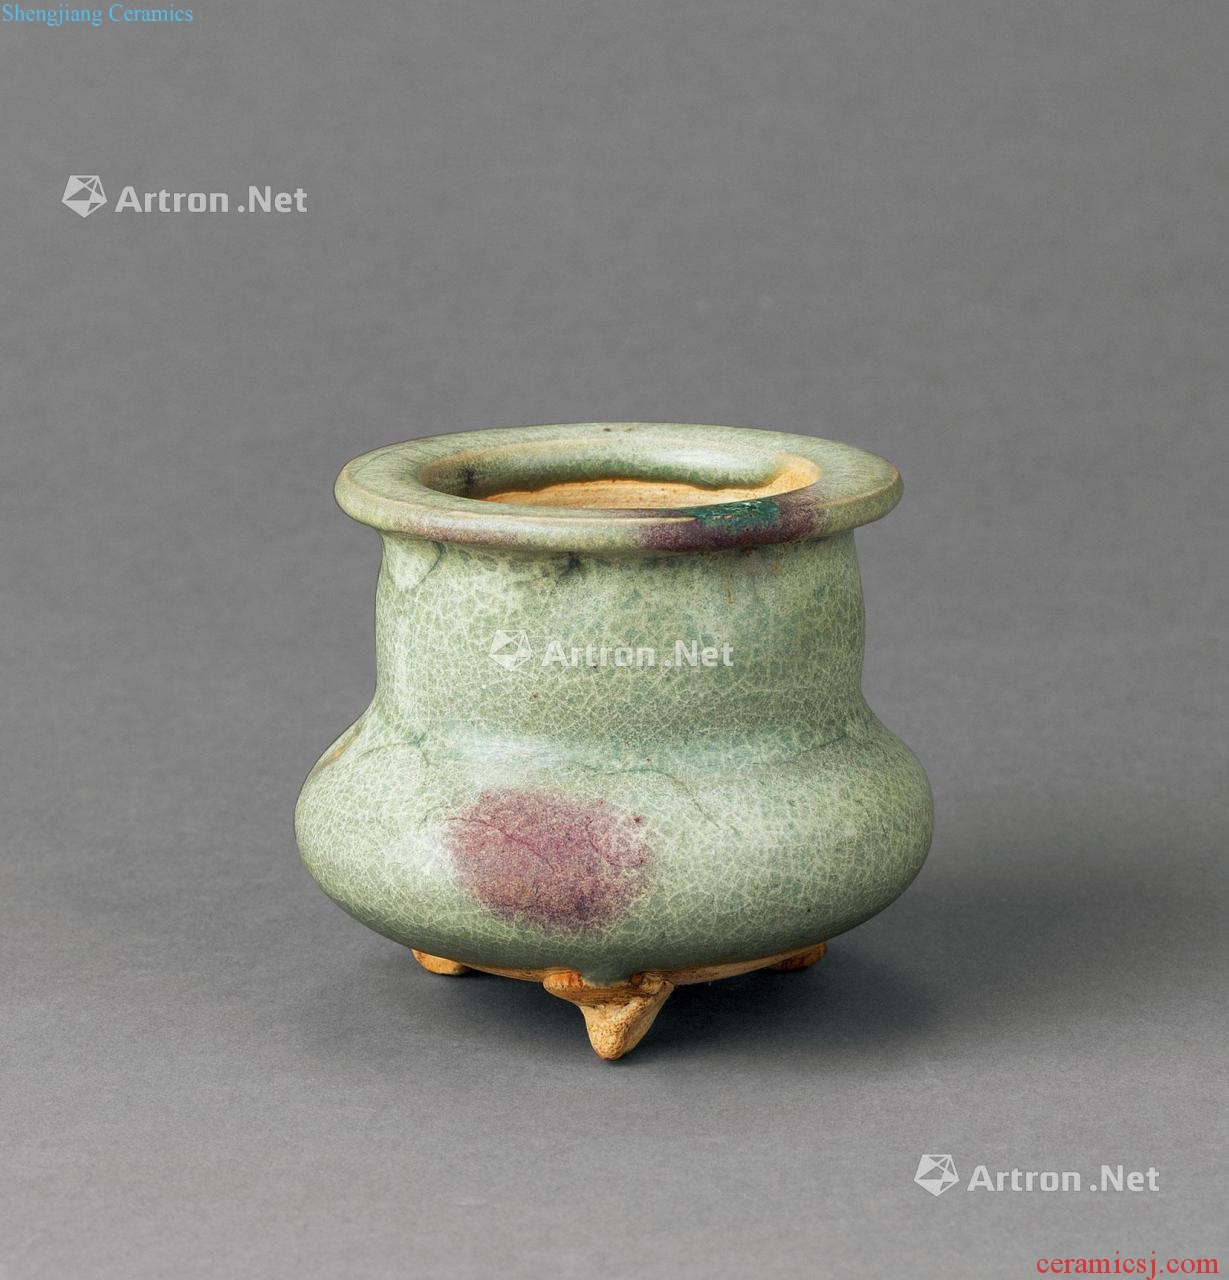 The yuan dynasty (1279-1368) three masterpieces incense burner